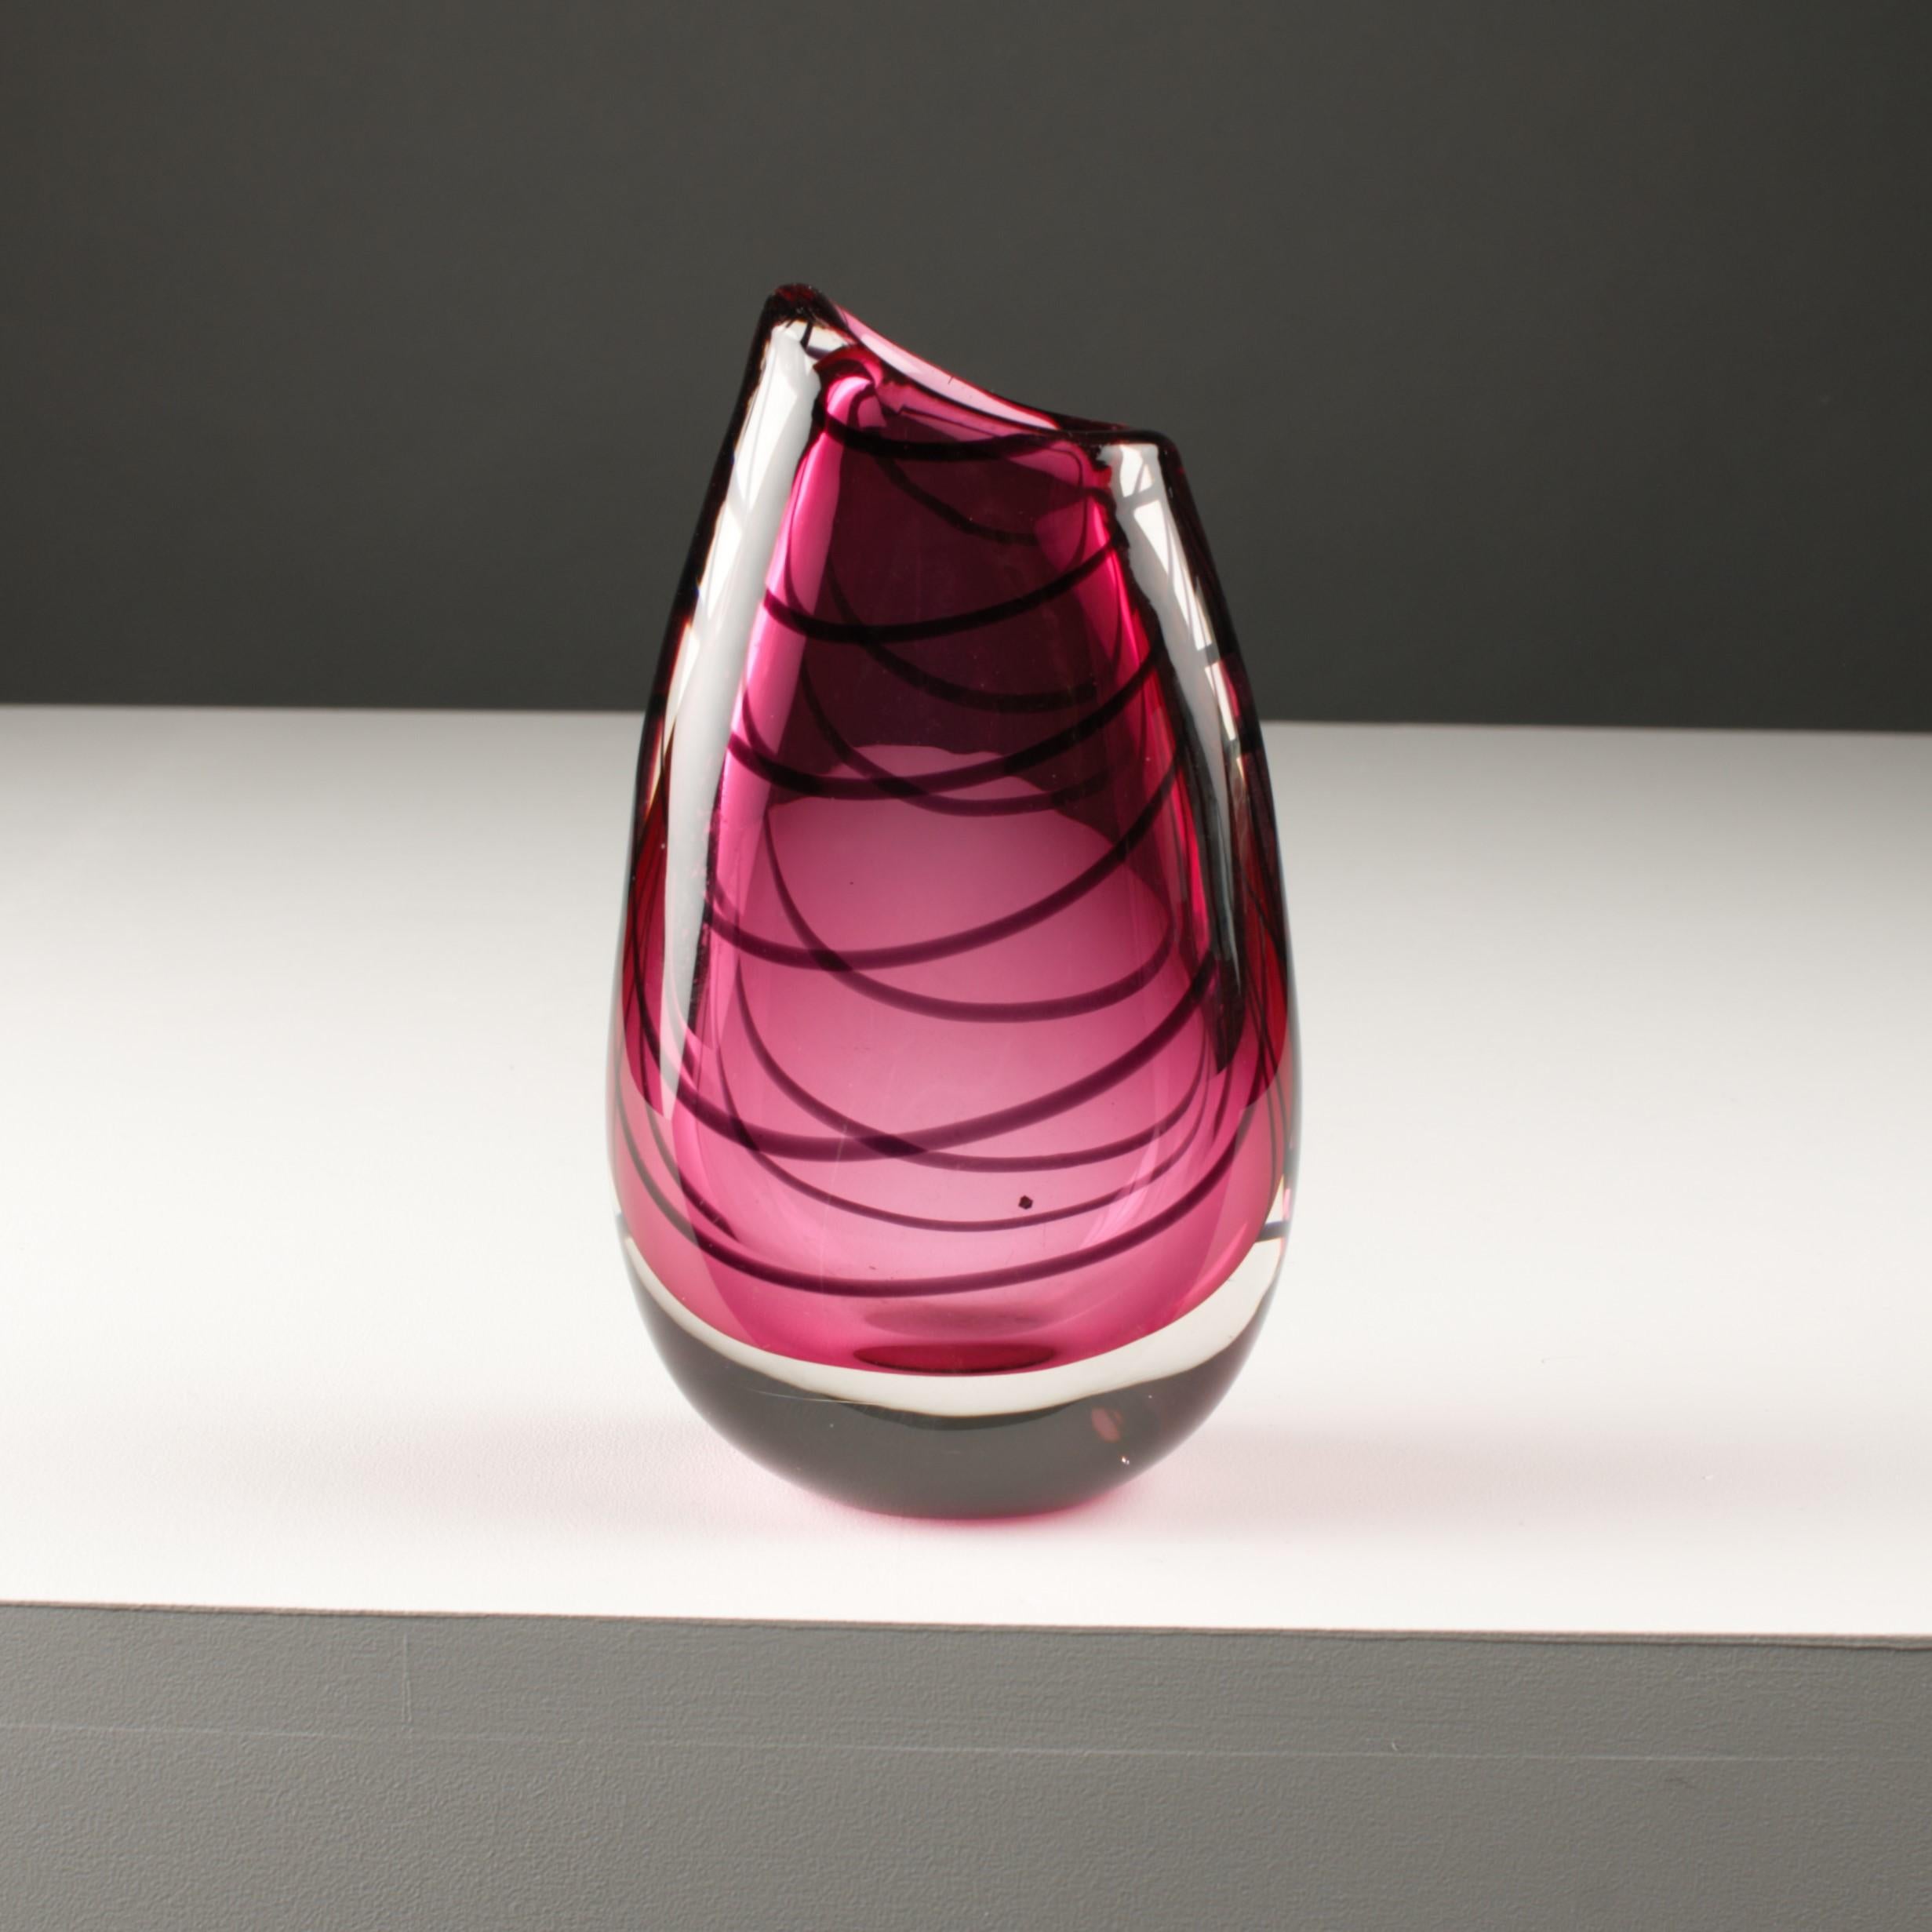 Mid-20th Century Midcentury Scandinavian Modern Glass Art Vase Deco Pink Red Magnor Vase Norway For Sale